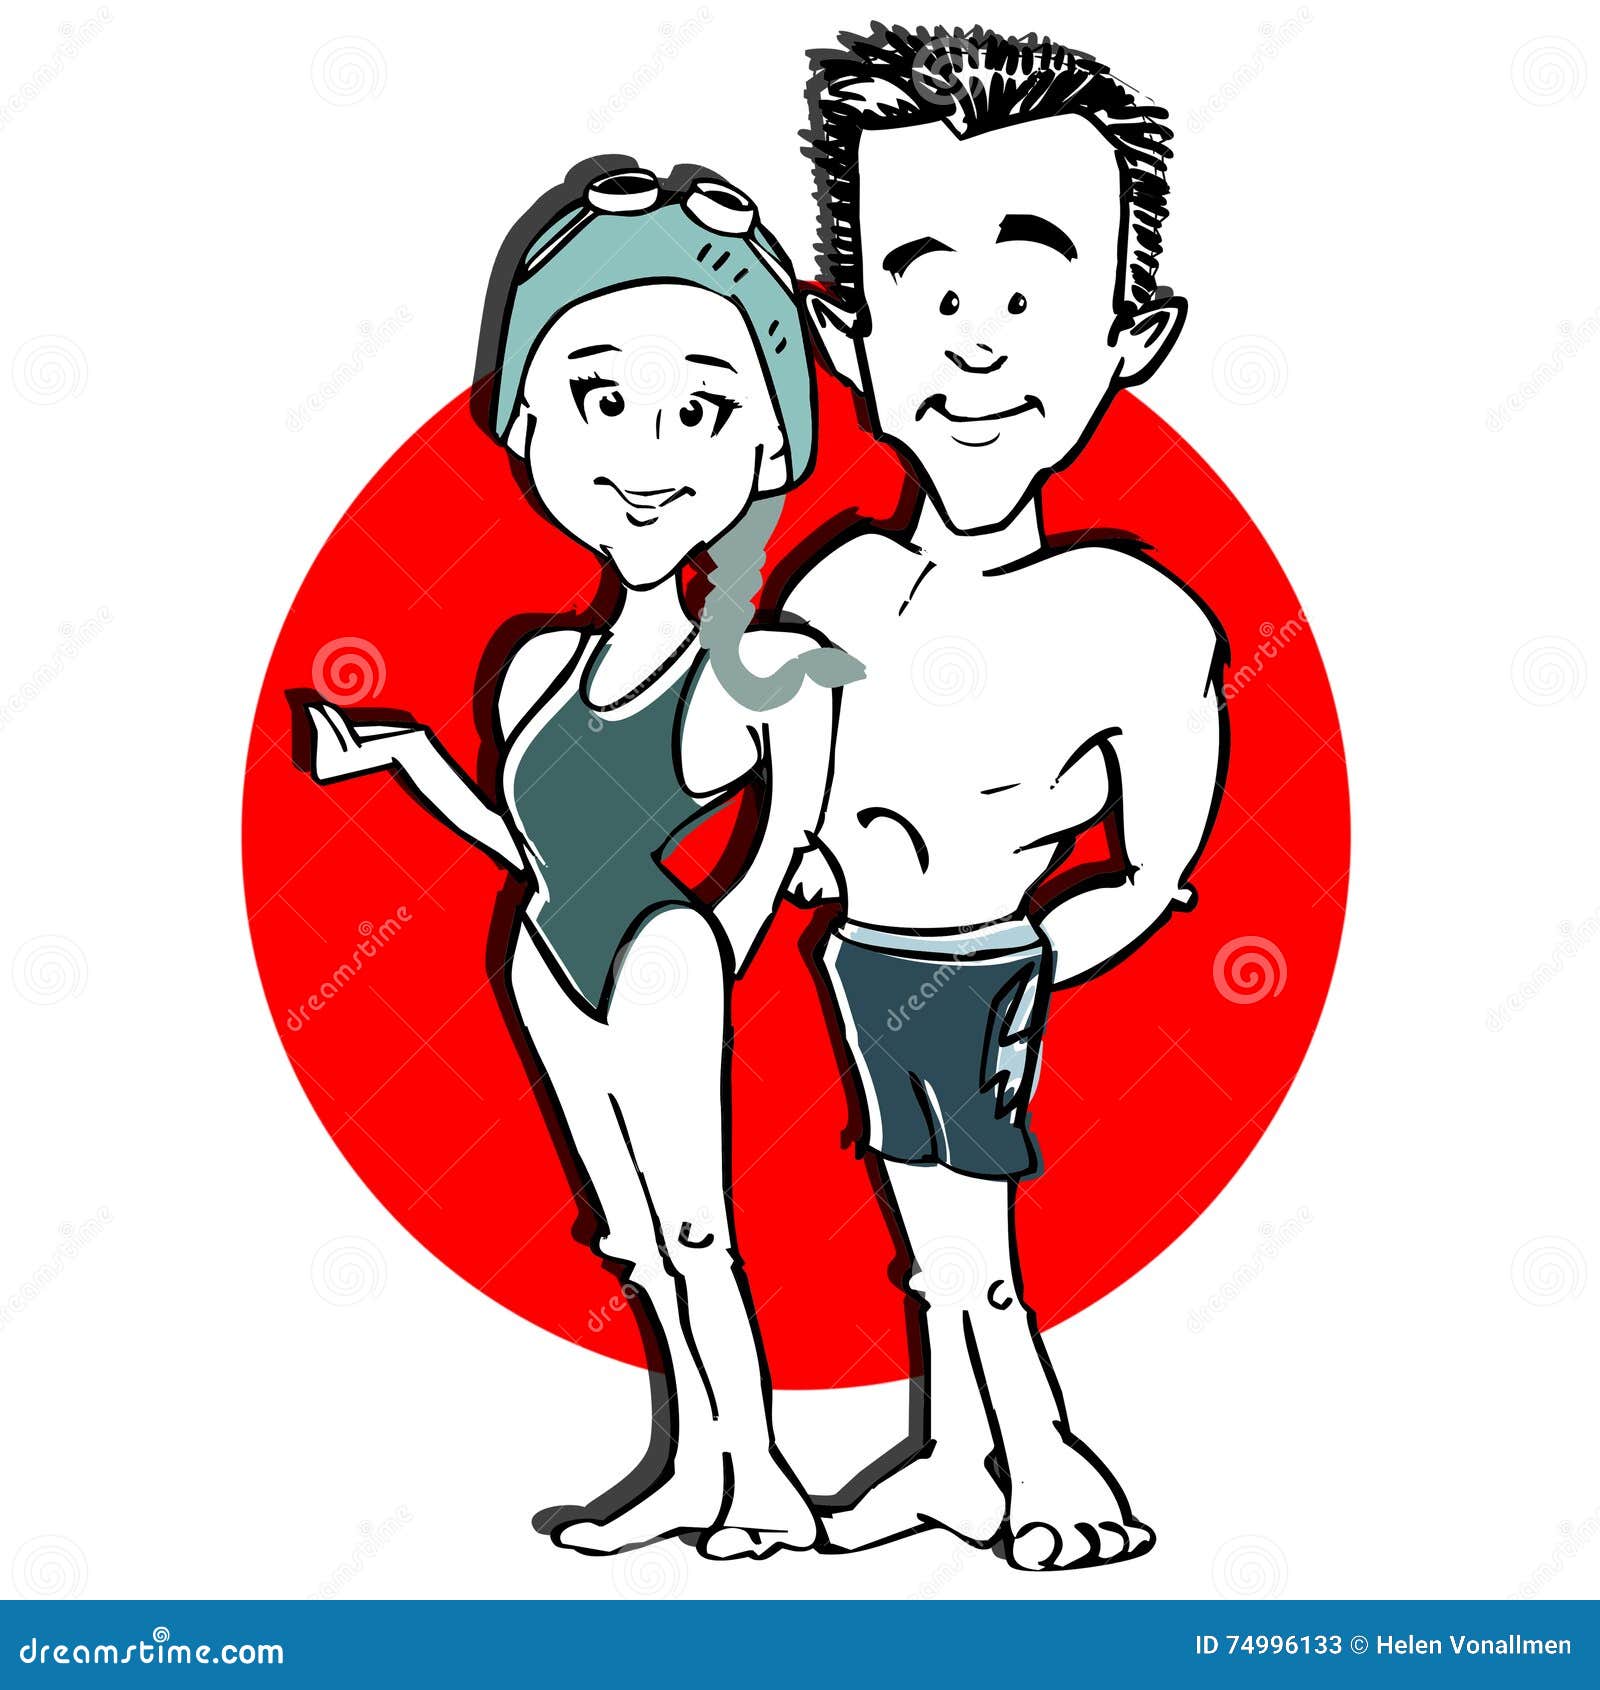 swimmer couple cartoon